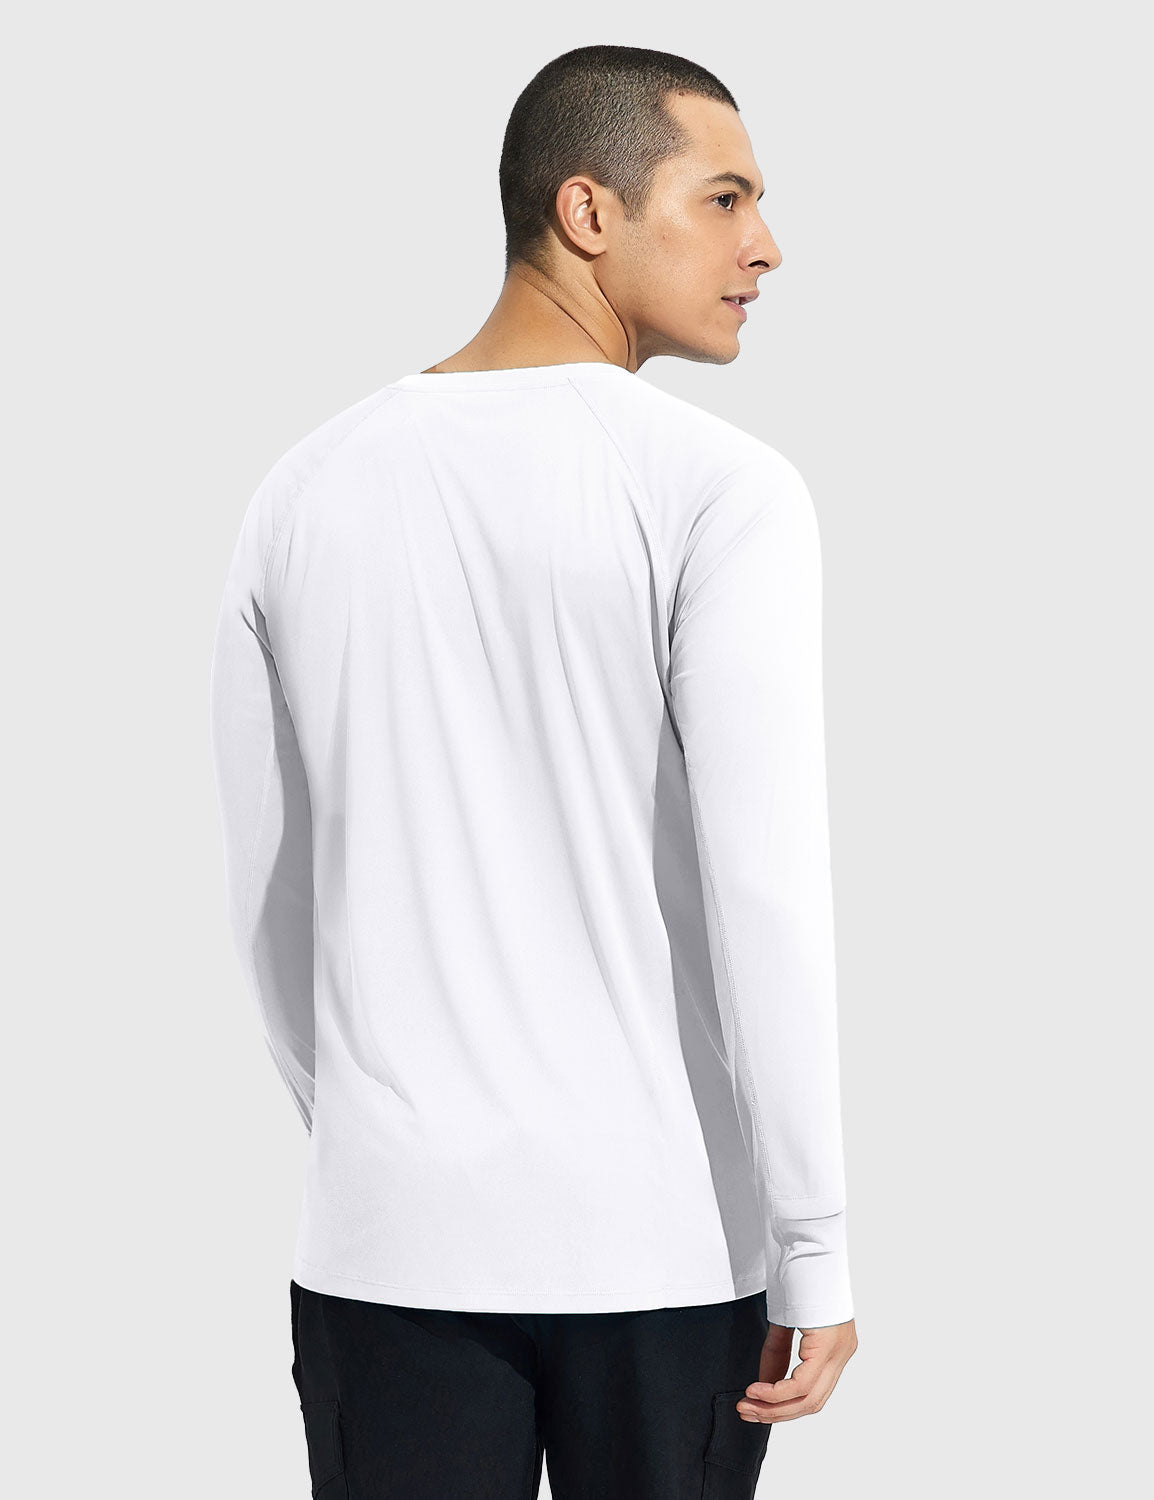 Baleaf Men‘s Quick-dry UPF 50+ Zipper Pocket Shirt Lucent White Back